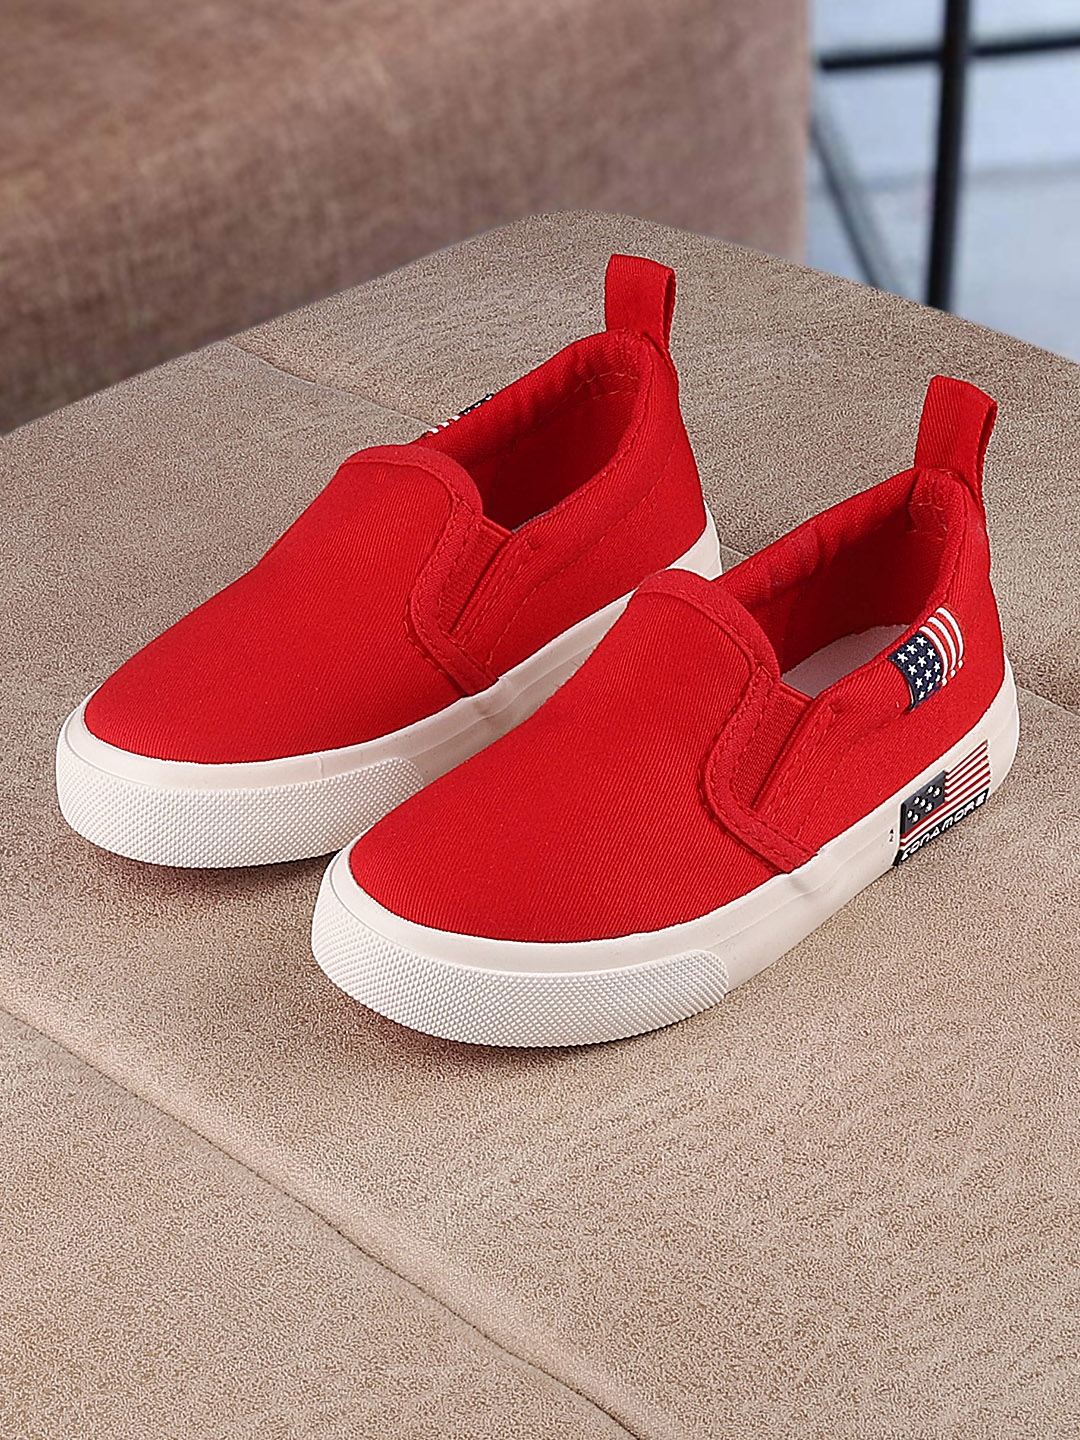 Buy Walktrendy Kids Red Slip On Sneakers - Casual Shoes for Unisex Kids ...